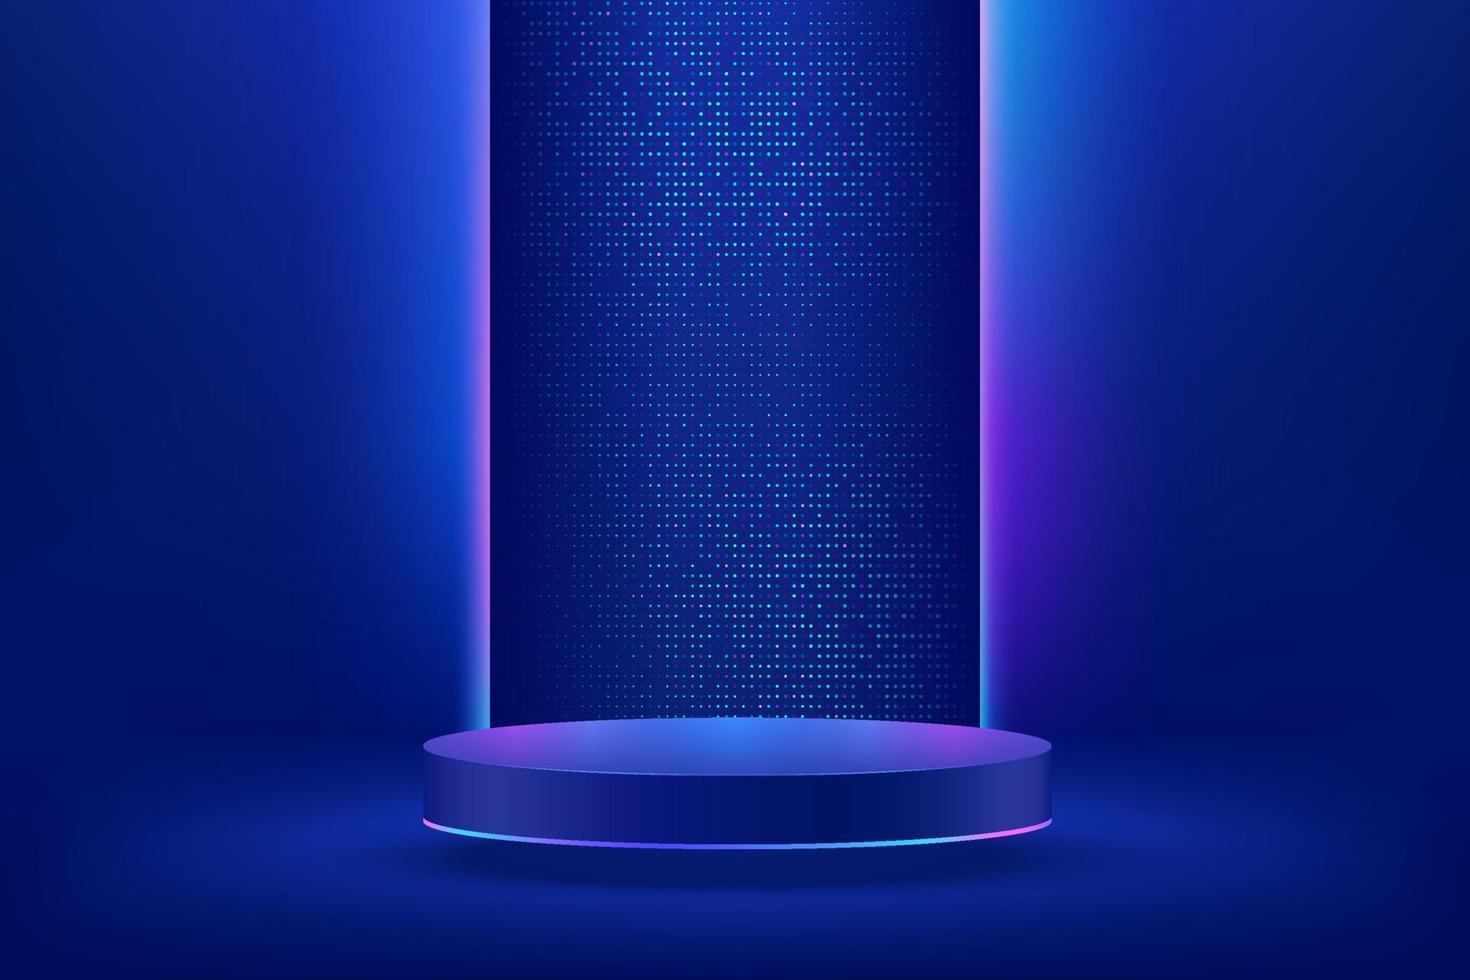 realistisch donkerblauw 3d cilinder voetstuk podium. sci-fi abstracte kamer met neonverlichting en glanzende stippen glitter. podium voor showcase. vector rendering geometrische vormen, productweergave. futuristische scène